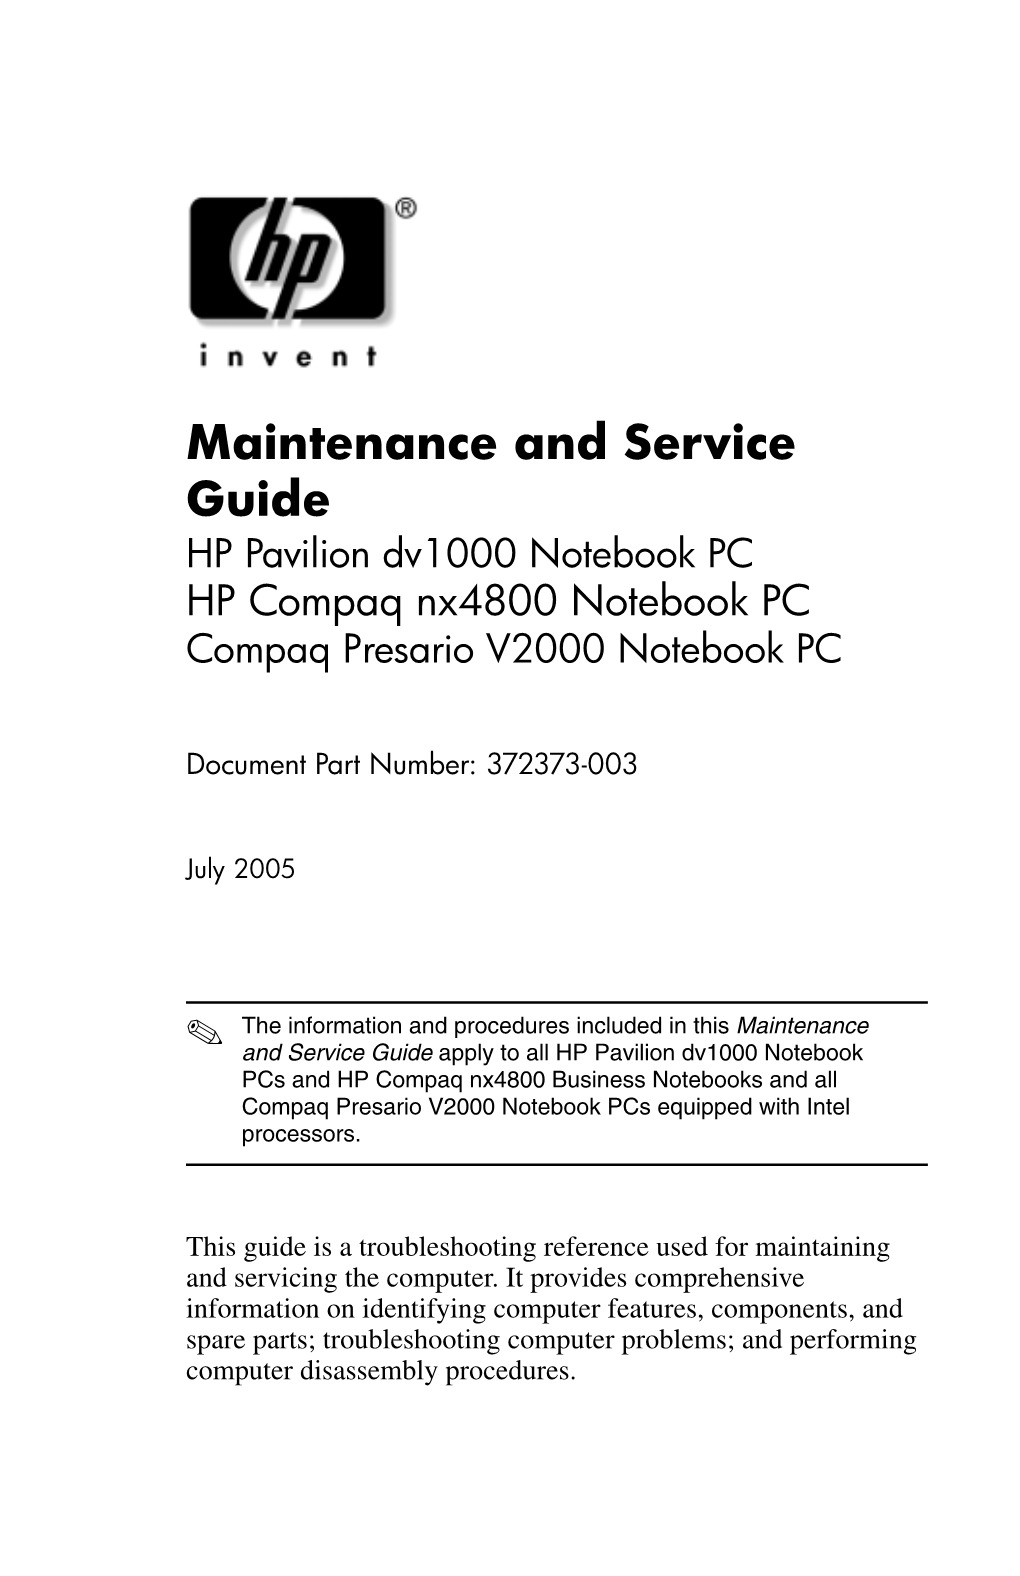 Maintenance and Service Guide HP Pavilion Dv1000 Notebook PC HP Compaq Nx4800 Notebook PC Compaq Presario V2000 Notebook PC